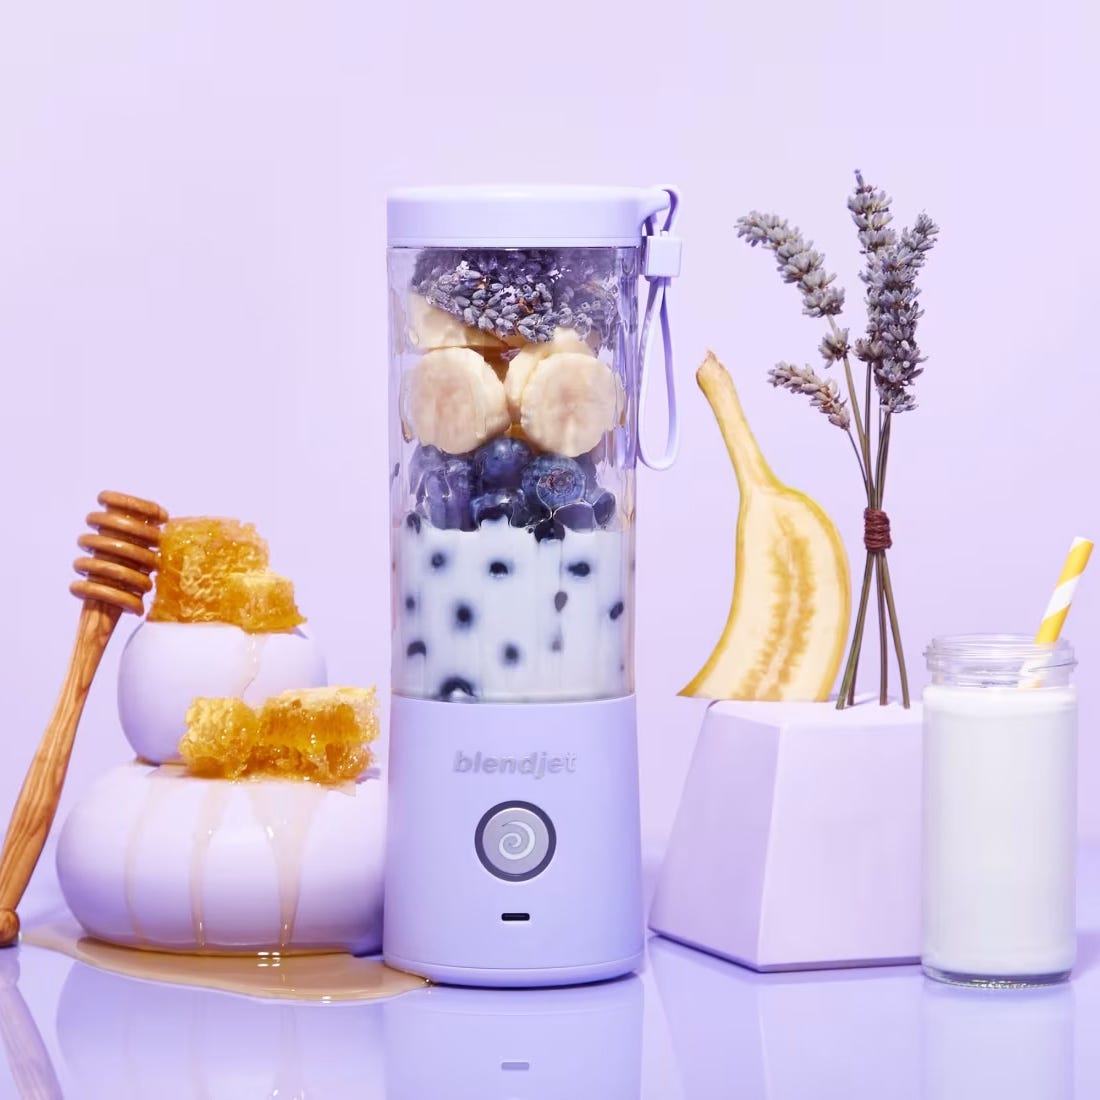 Portable blender with fruits and honey, alongside a banana, milk jar, and lavender sprigs.